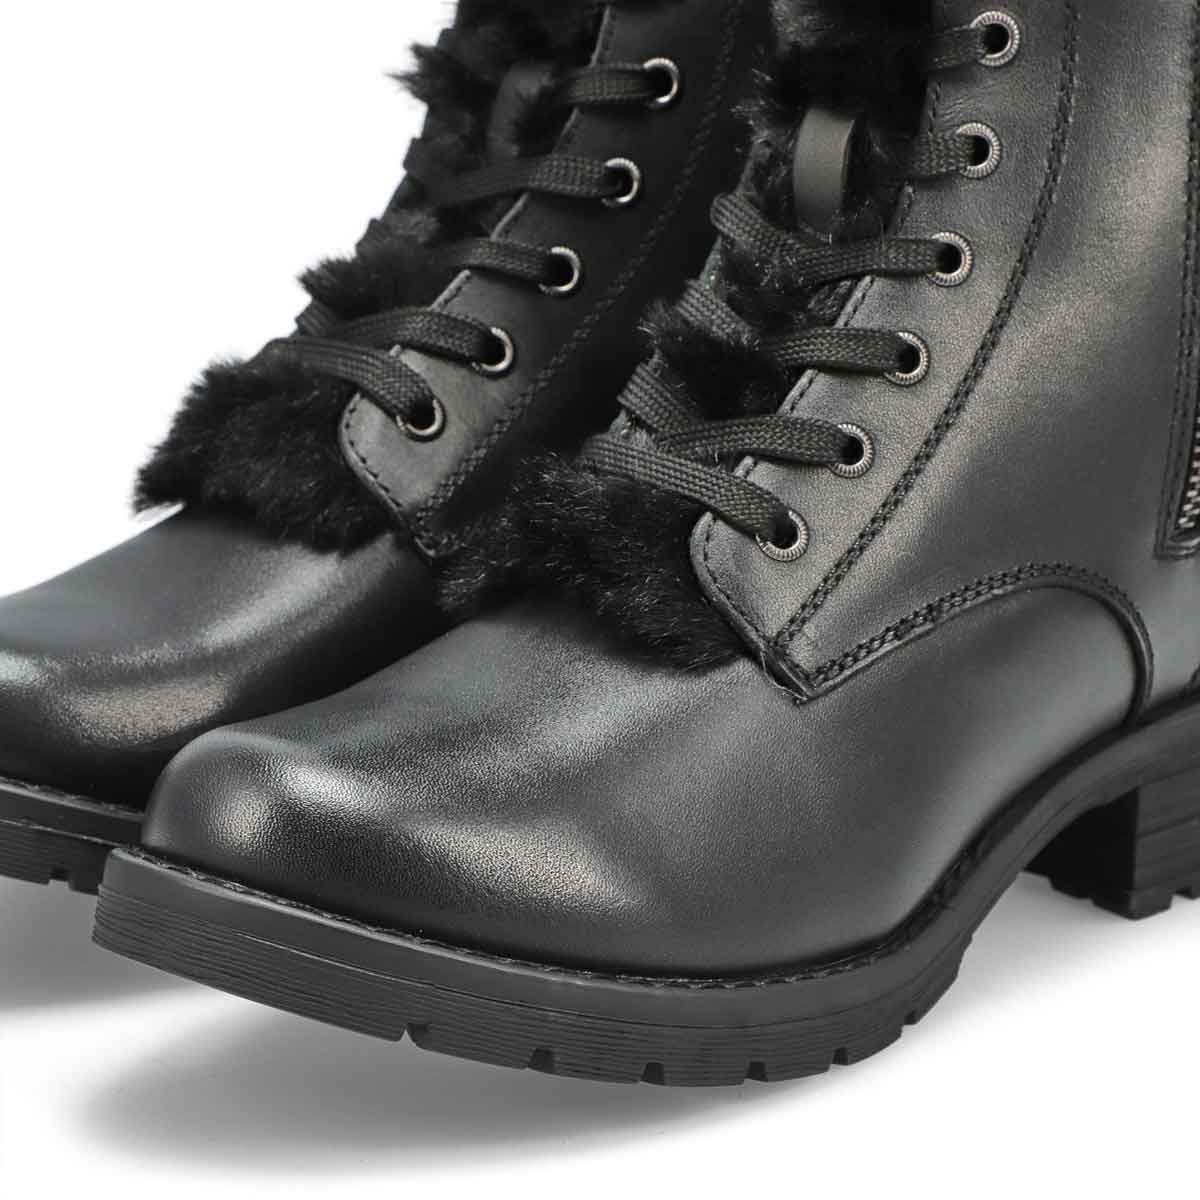 softmoc combat boots